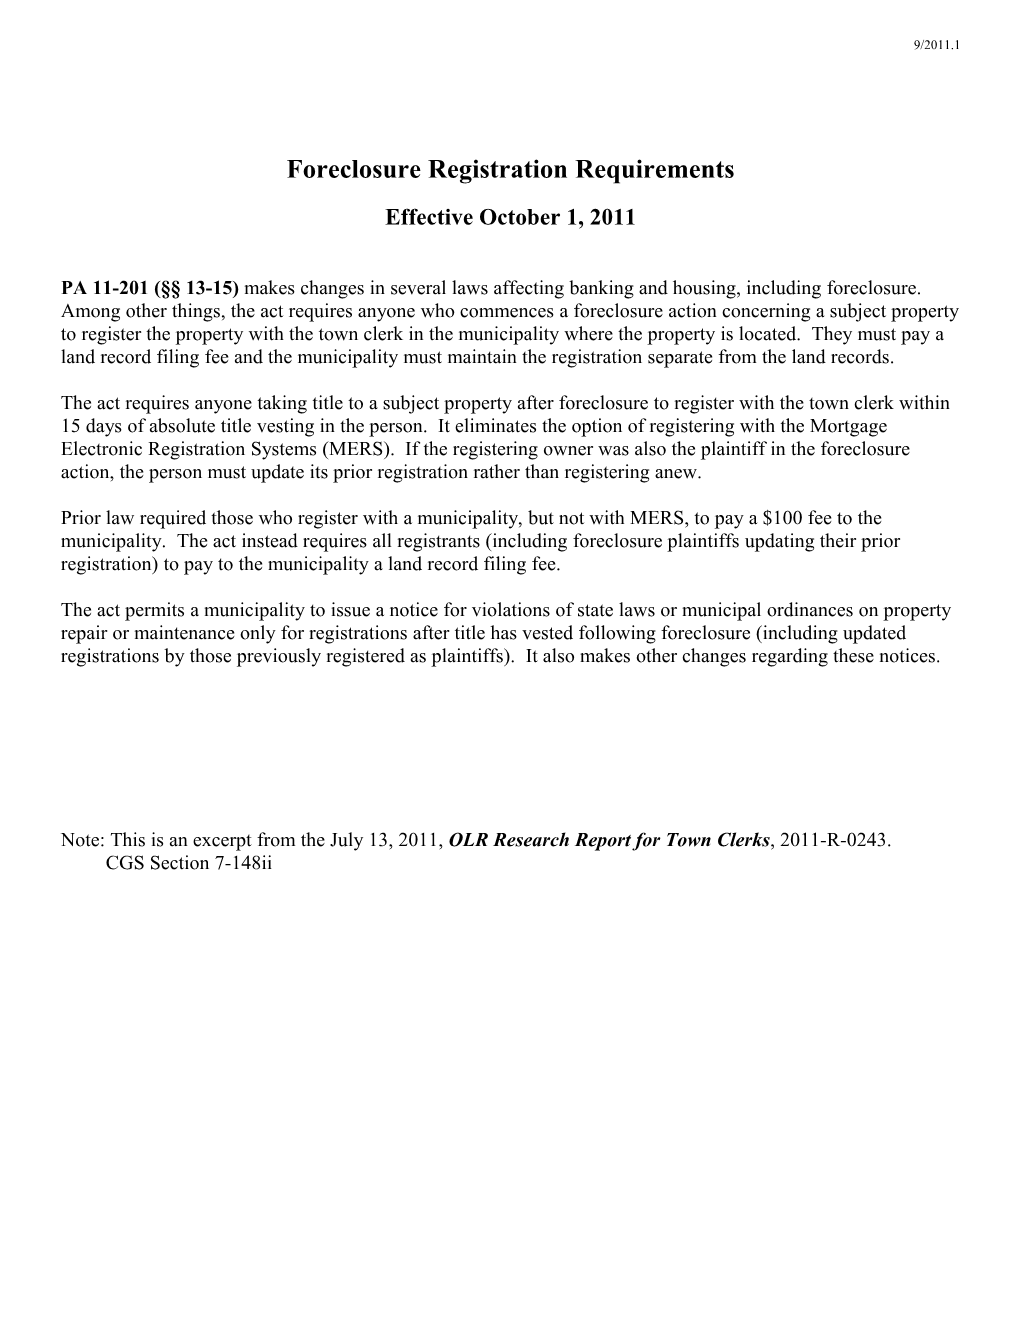 Foreclosure Registration Requirements